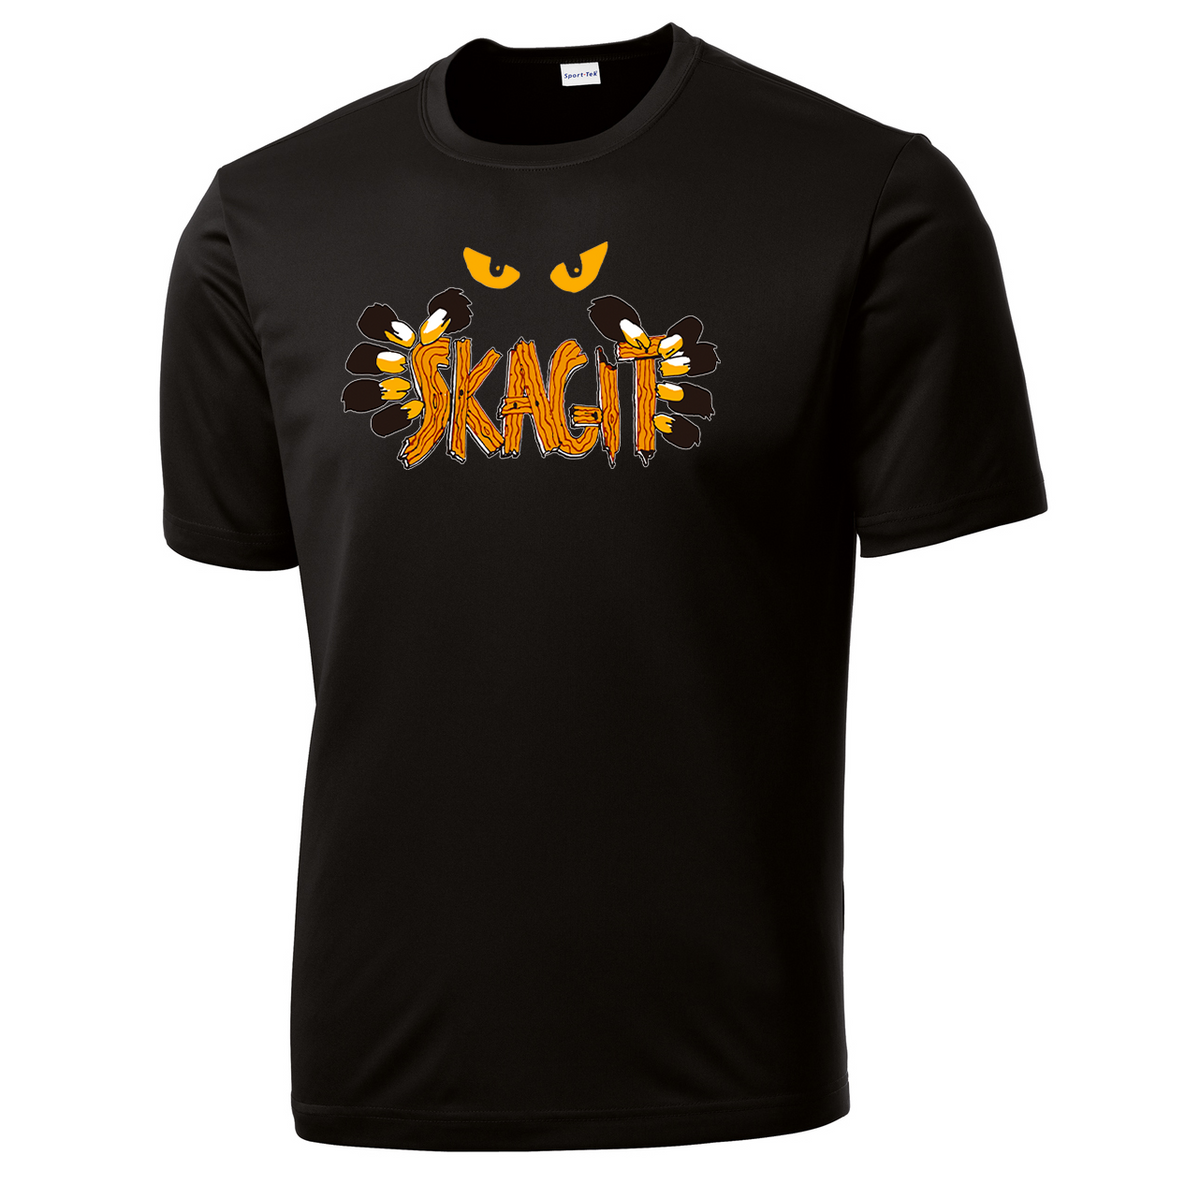 Skagit Volleyball Performance T-Shirt